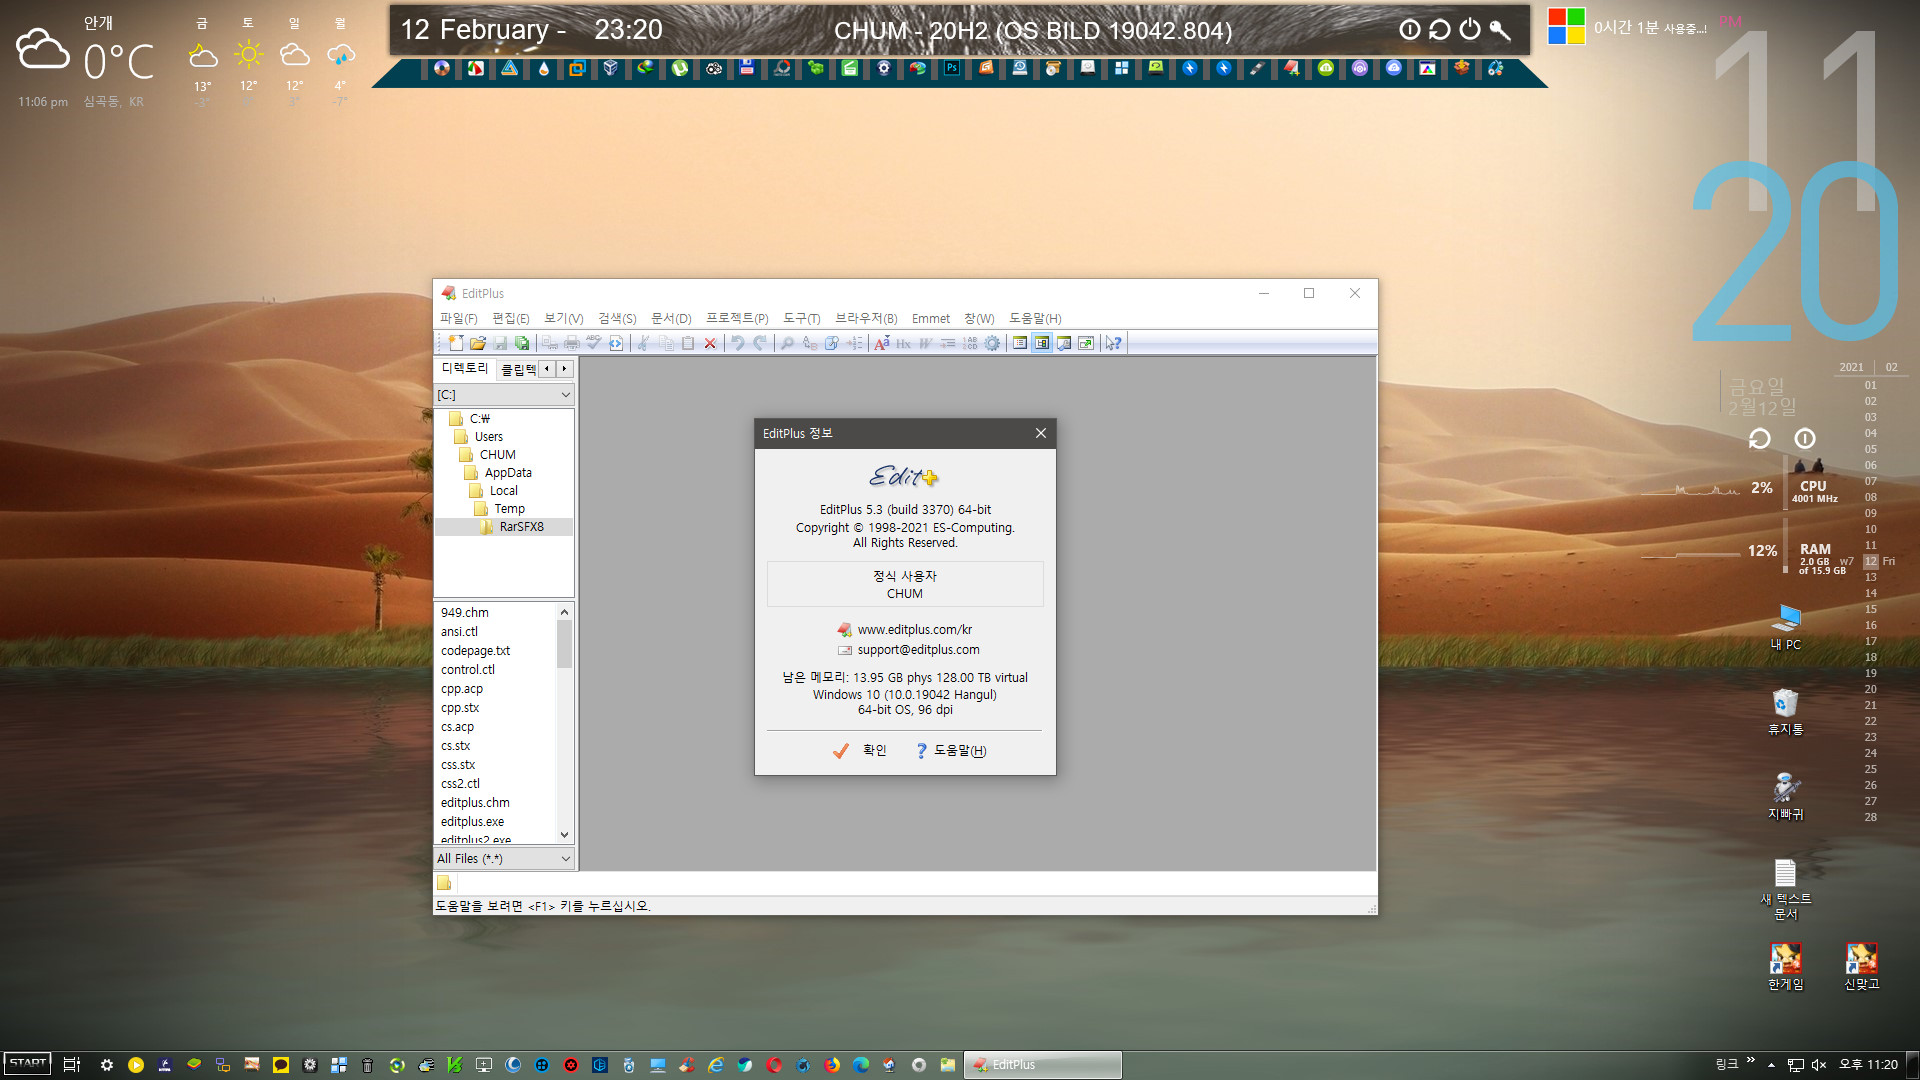 instal the last version for mac EditPlus 5.7.4529